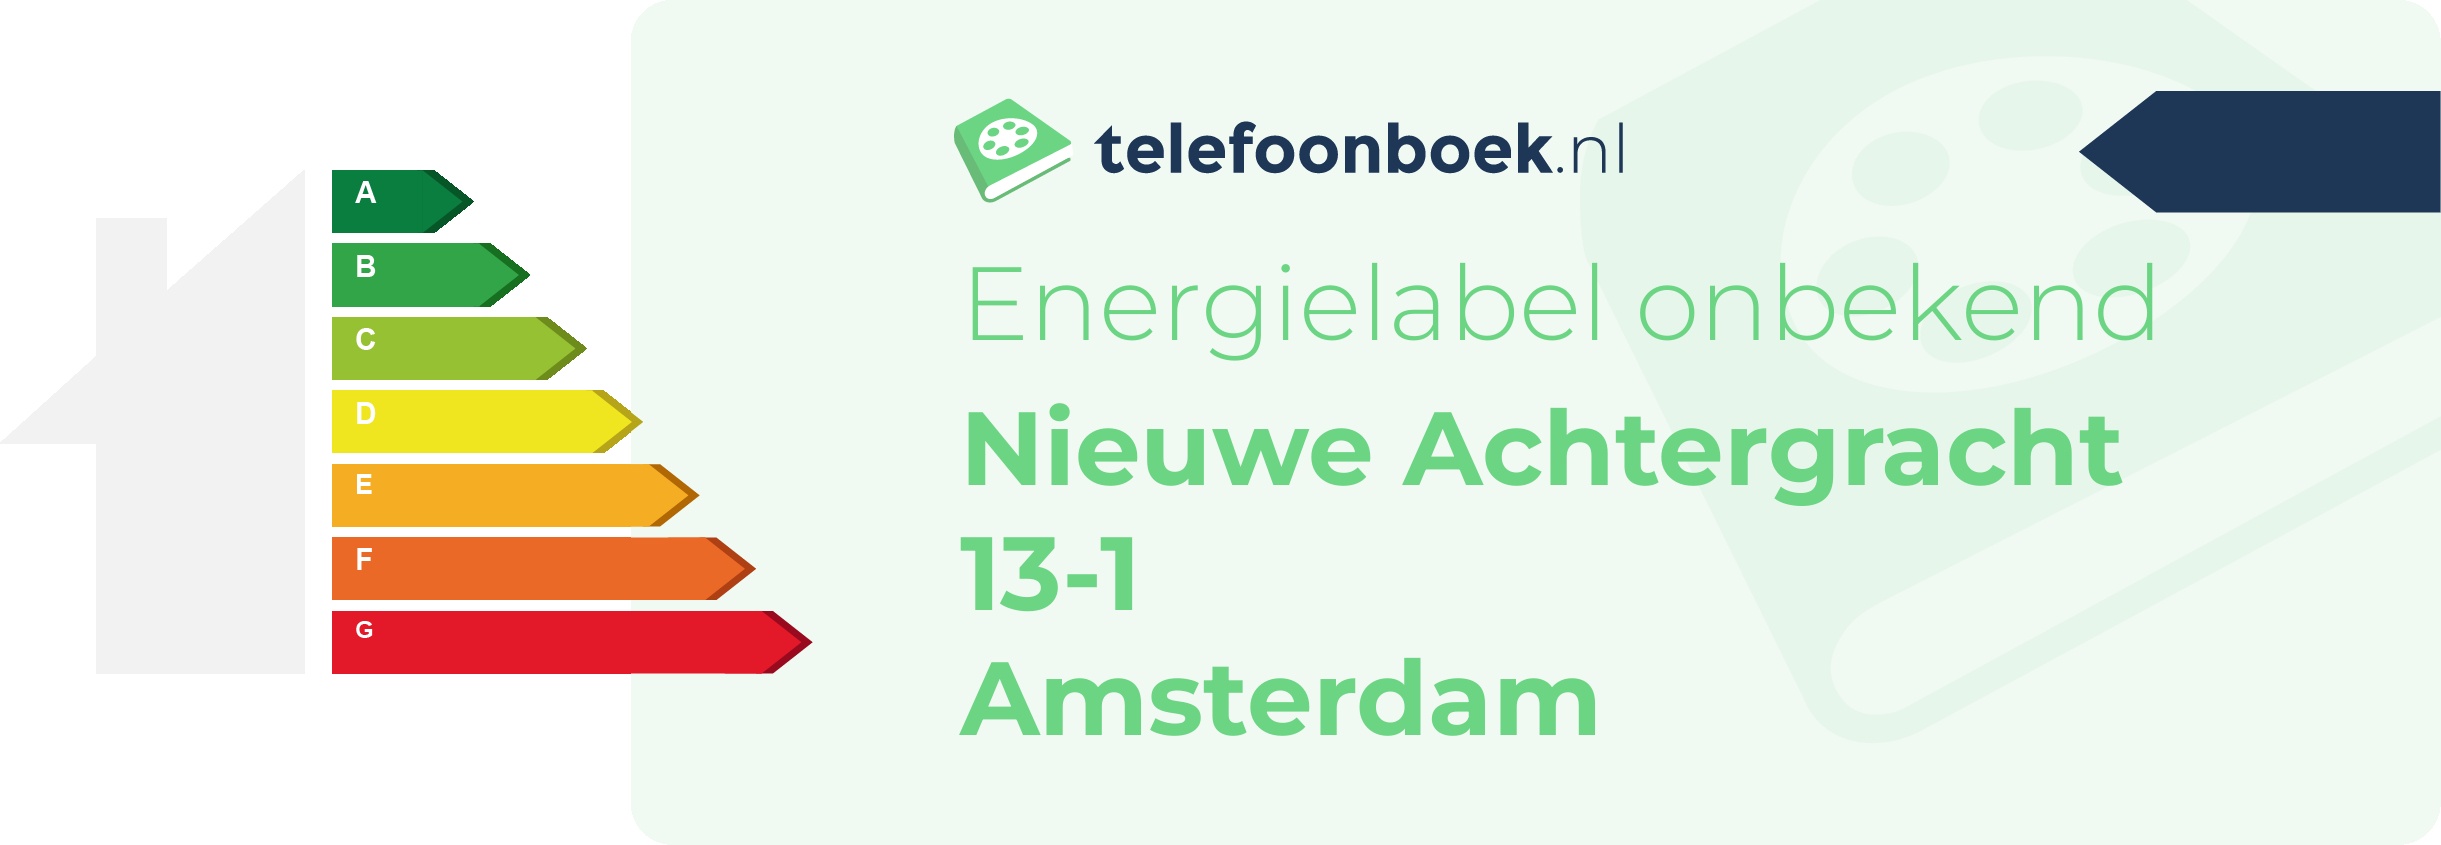 Energielabel Nieuwe Achtergracht 13-1 Amsterdam